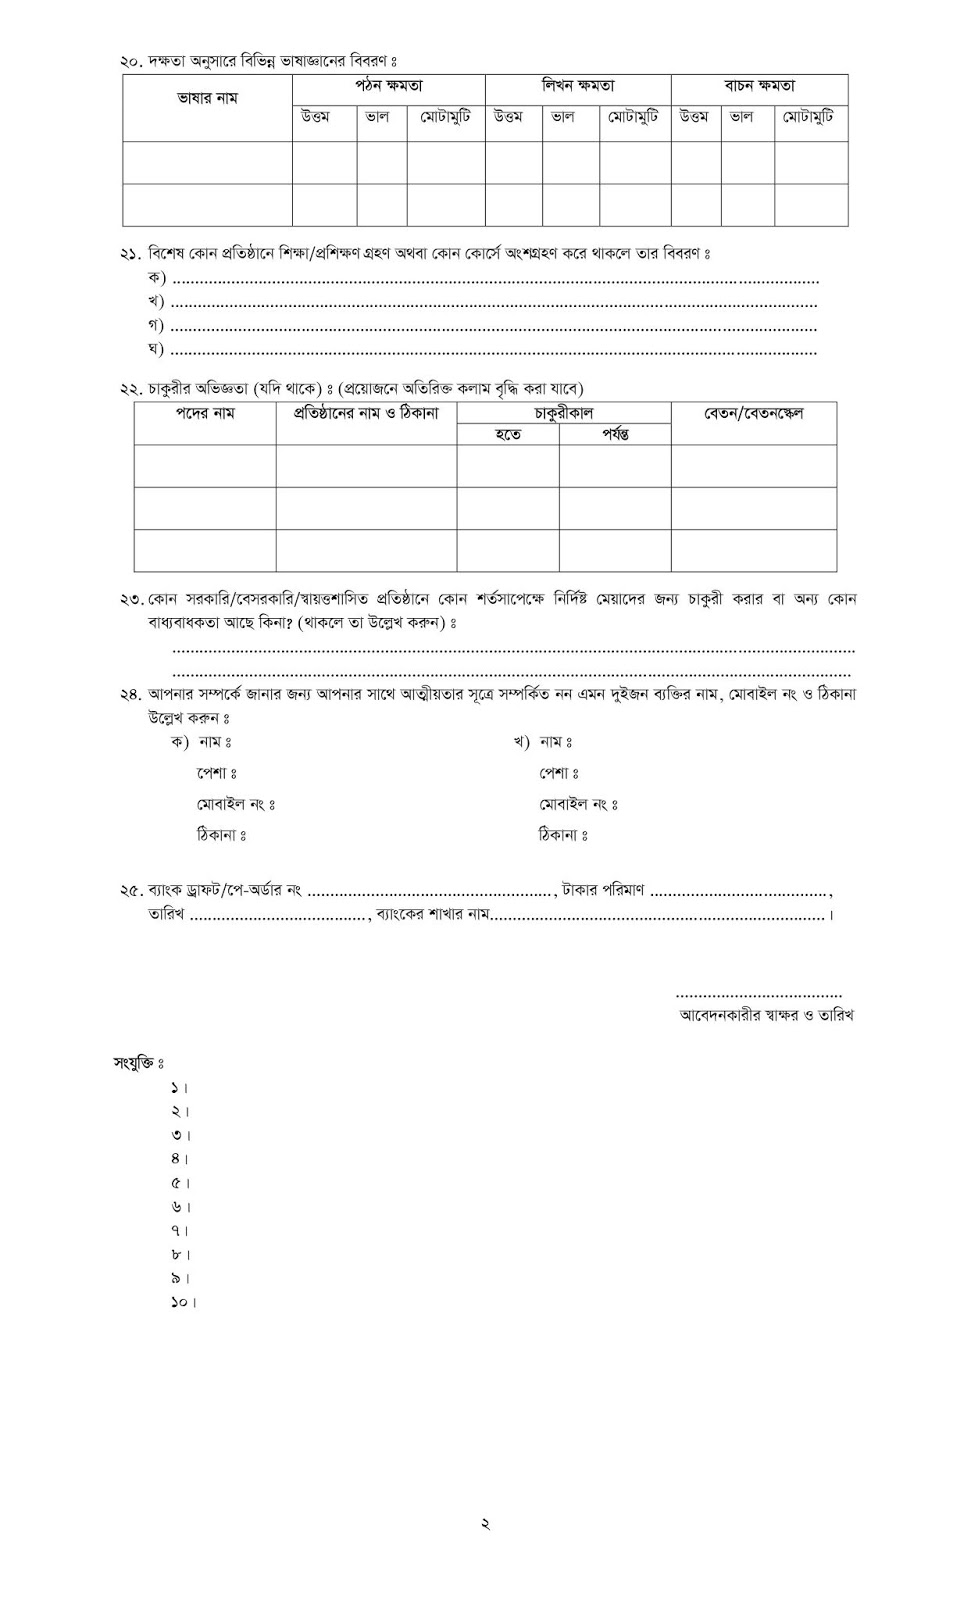 Rangamati Science and Technology University (RMSTU) Teacher Job Application Form